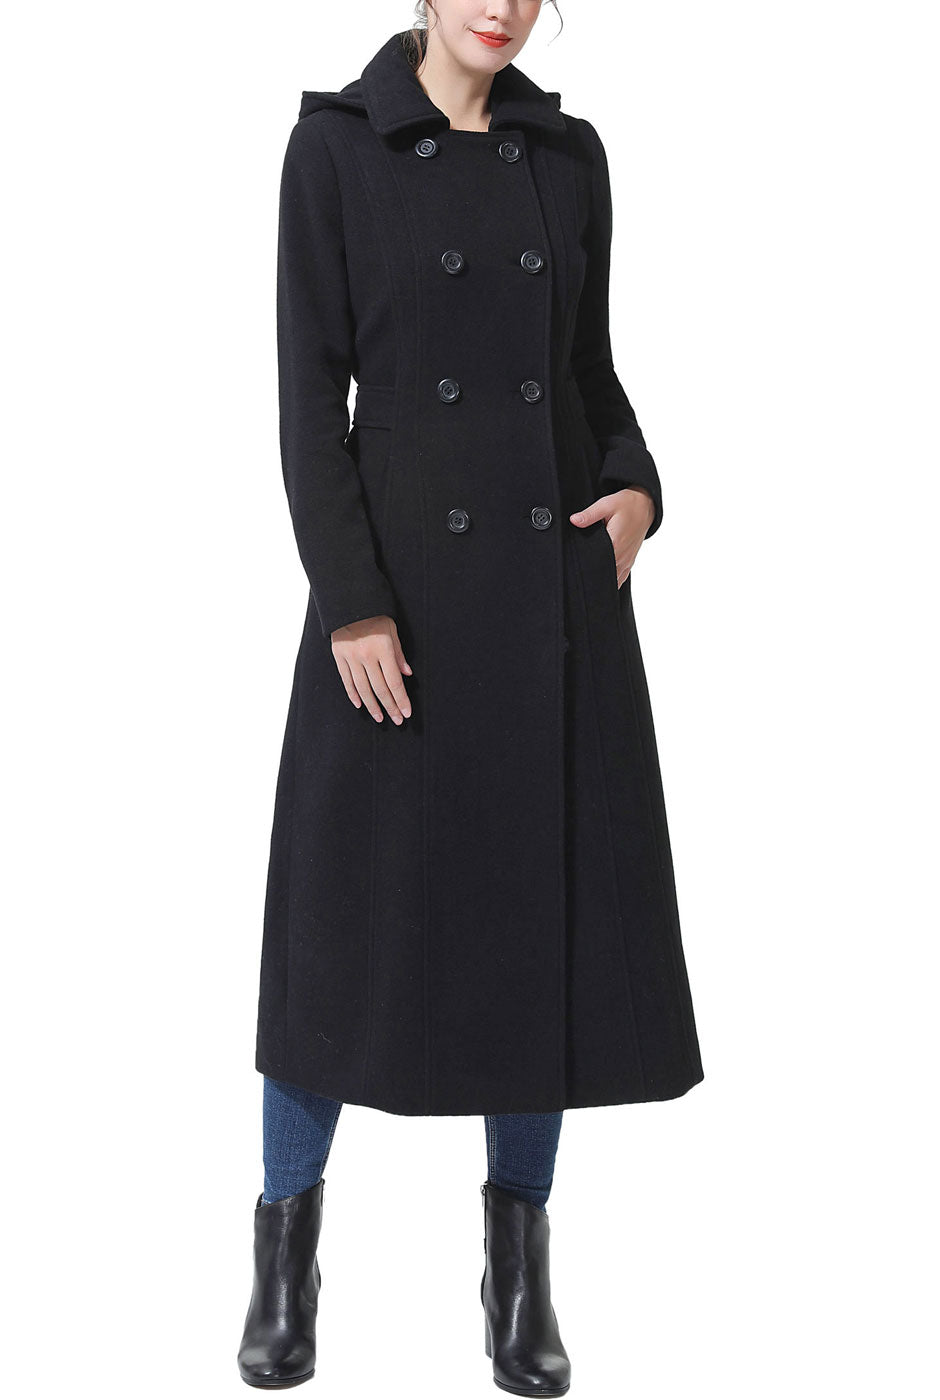 Women's Black Coats  Hooded Winter Coats & Jackets